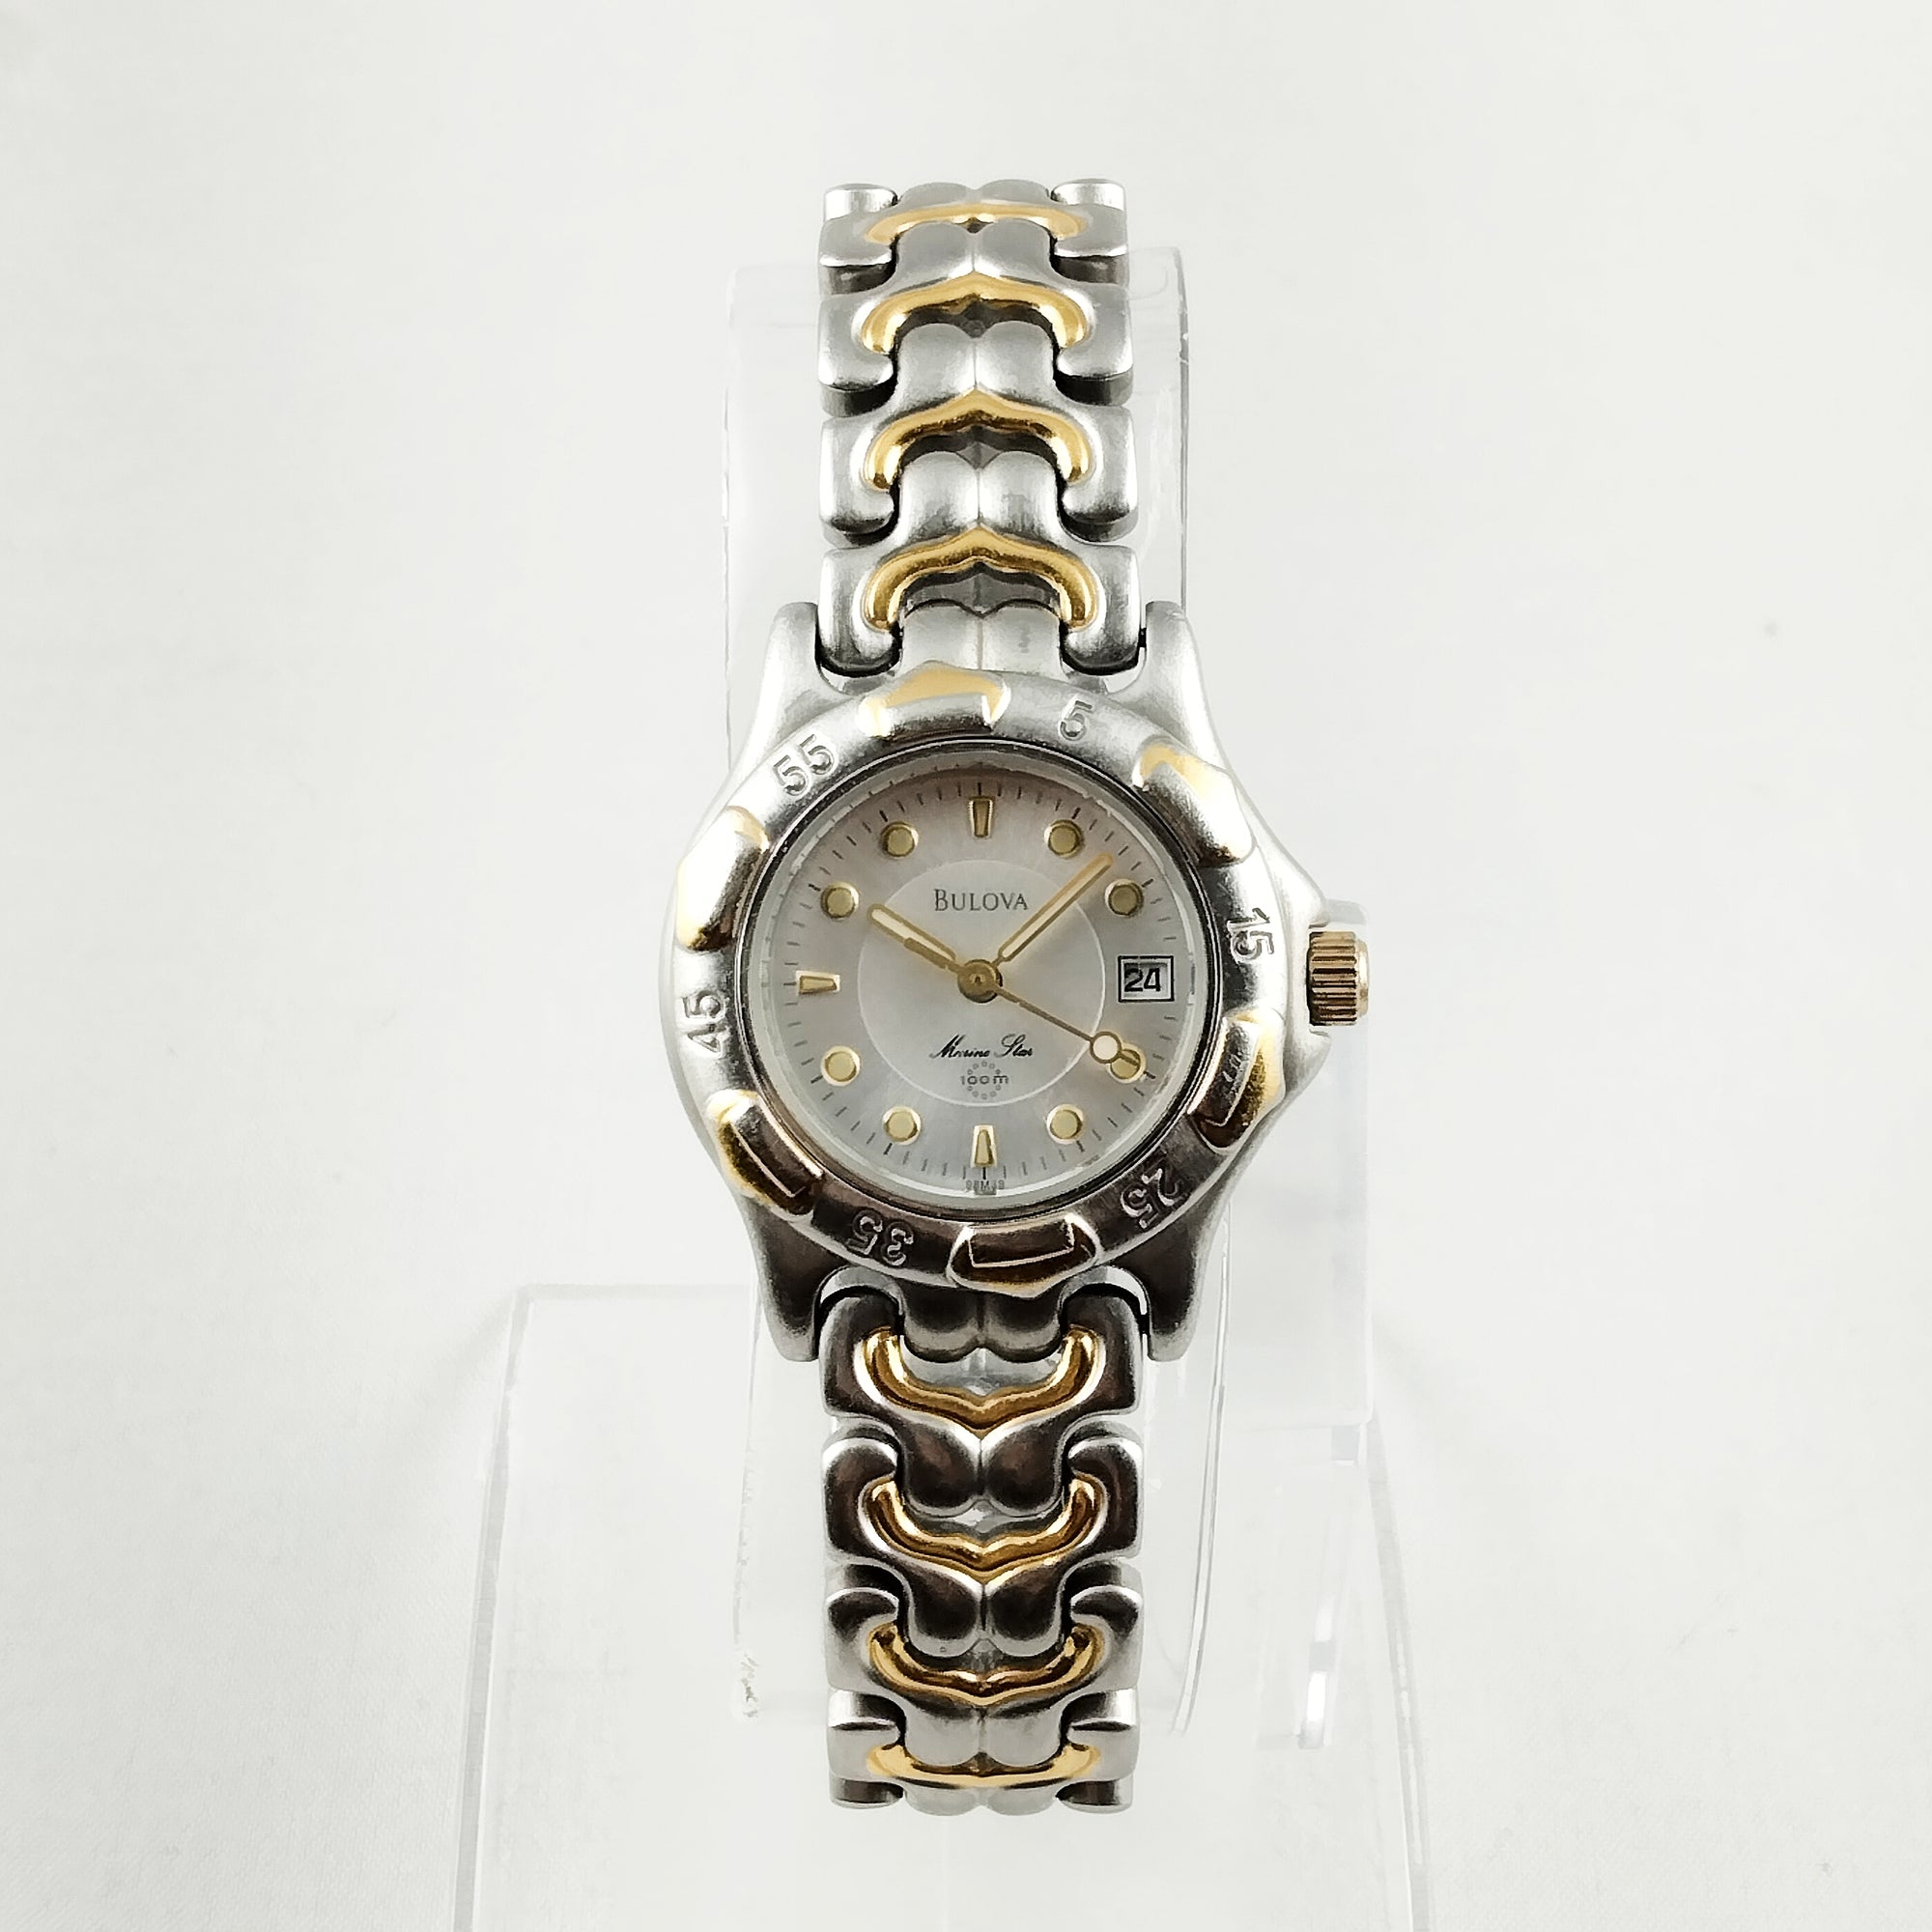 Bulova Men's Silver and Gold Tone Watch, Date Window, Bracelet Strap